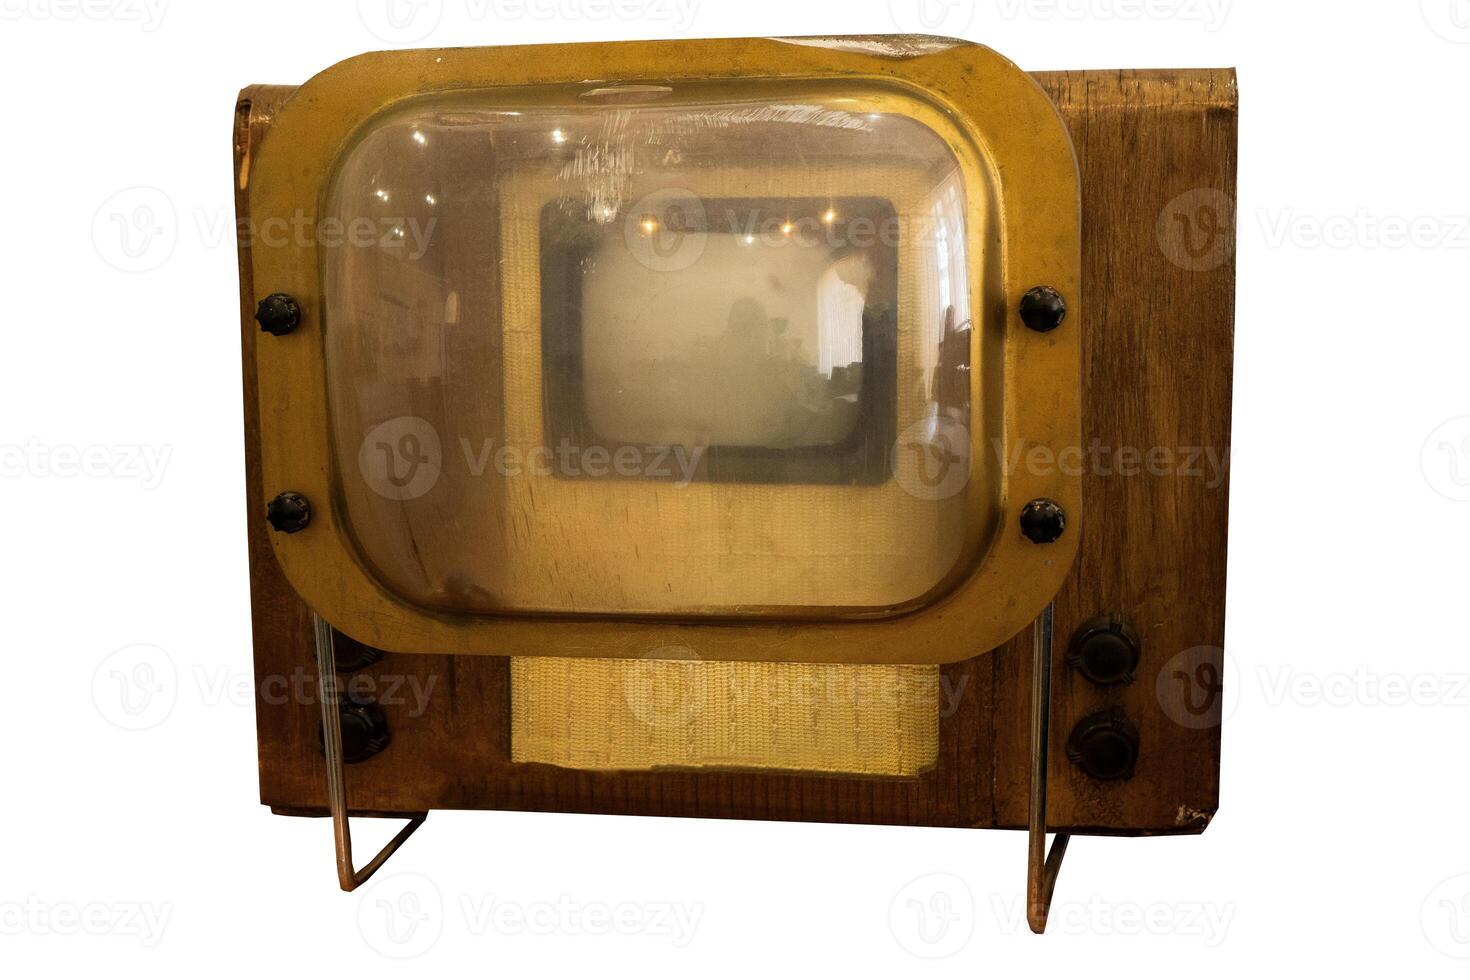 Old TV isolated on white background photo